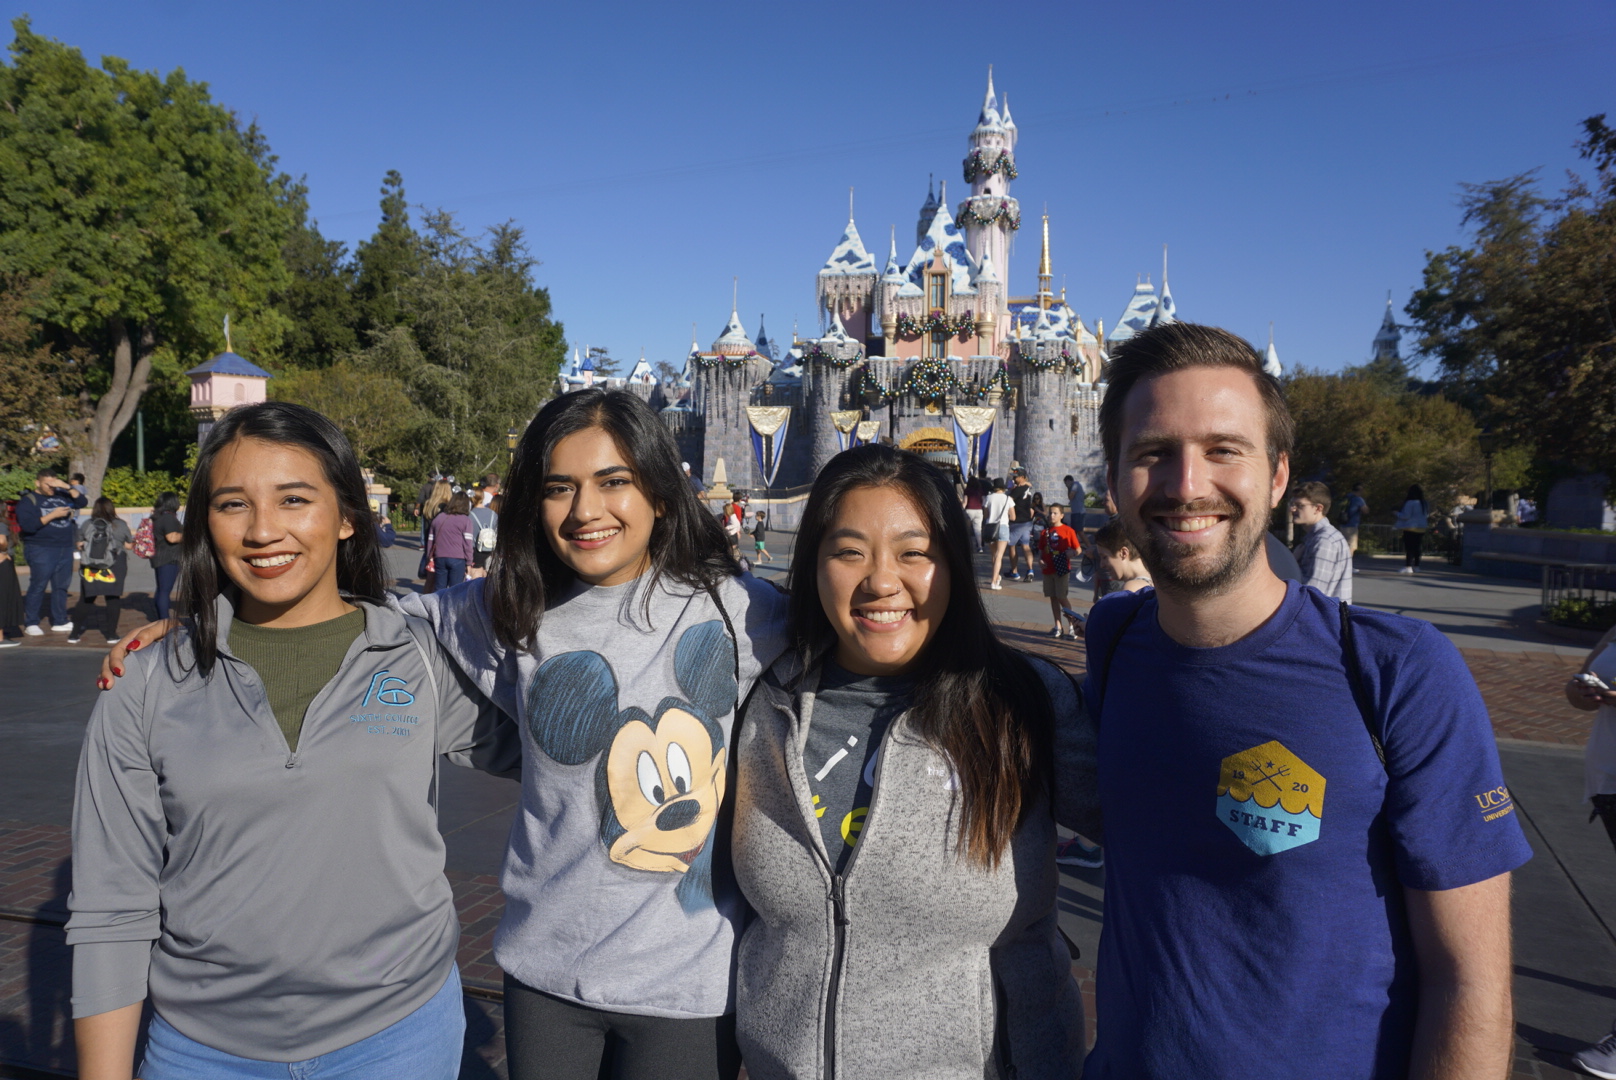 Students in front of Disneyland castle